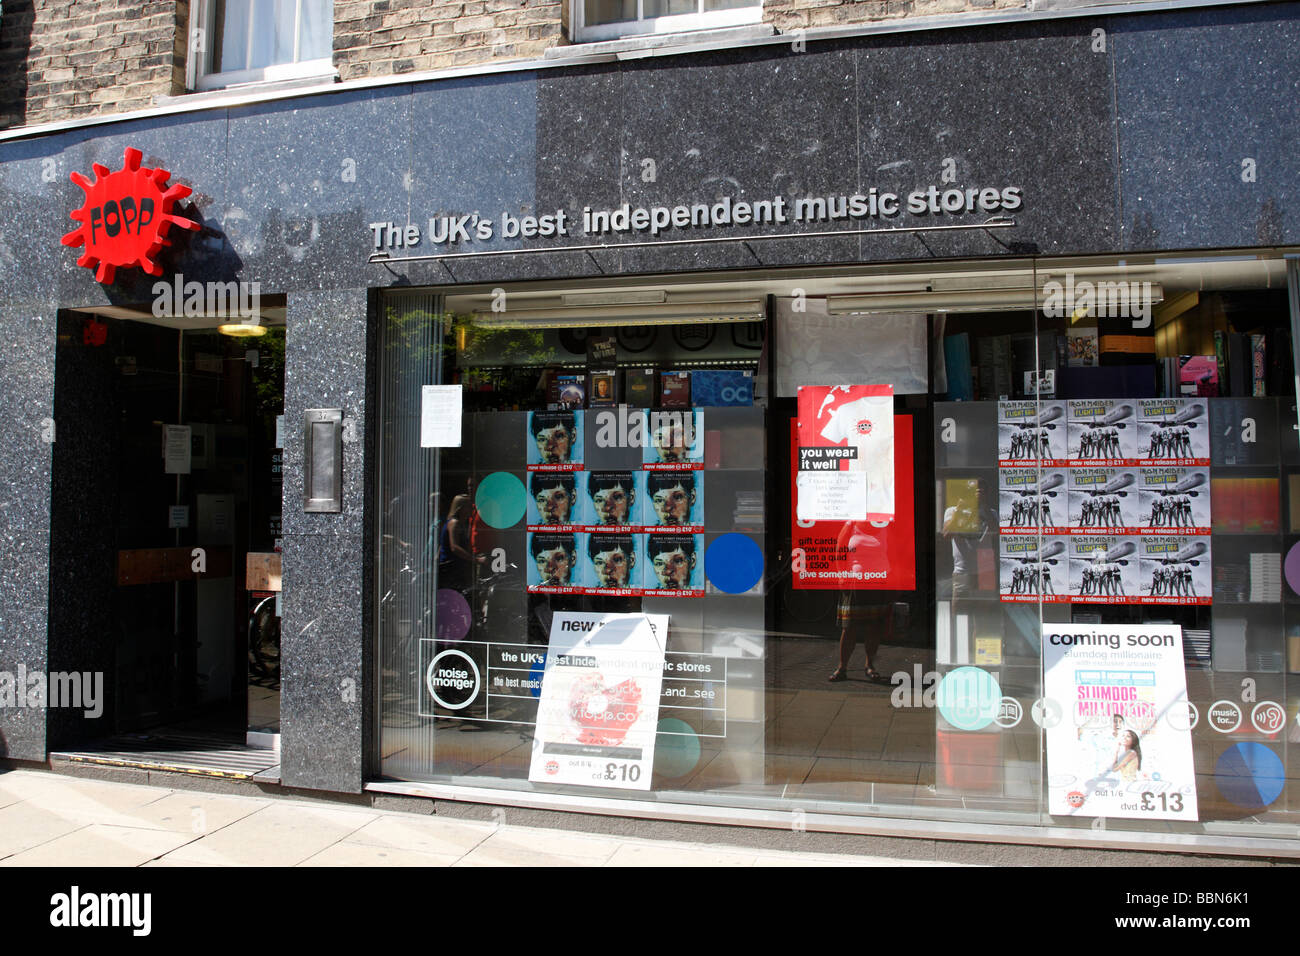 fopp an independent music store on sidney street cambridge uk Stock Photo